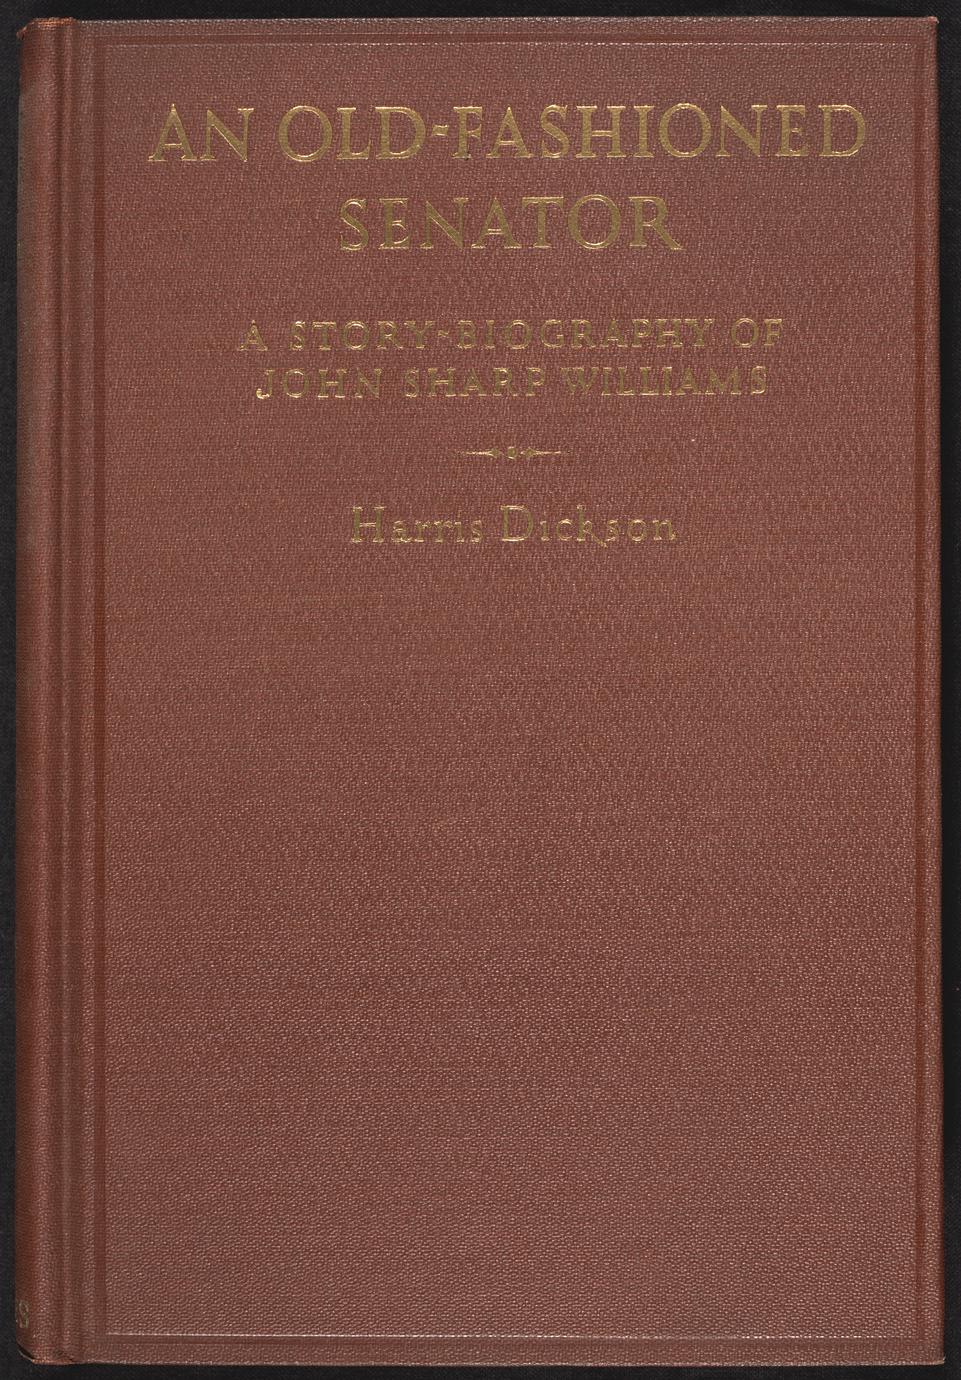 An old-fashioned senator : a story-biography of John Sharp Williams (1 of 3)